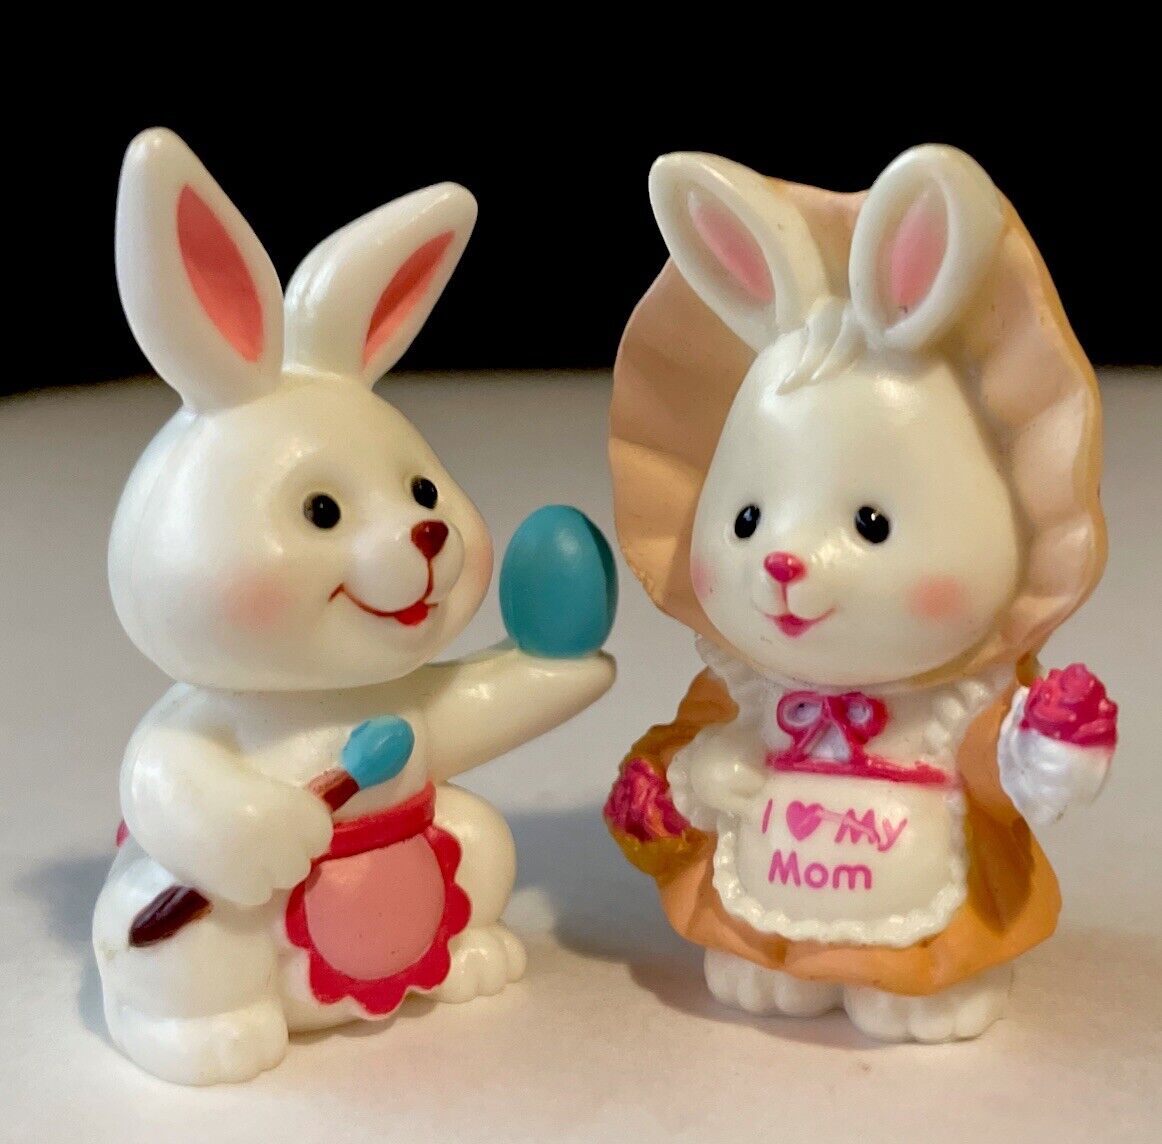 Vintage Russ Berrie Easter Bunnies Miniature Figurines Set of 2 “I 💗 My Mom”